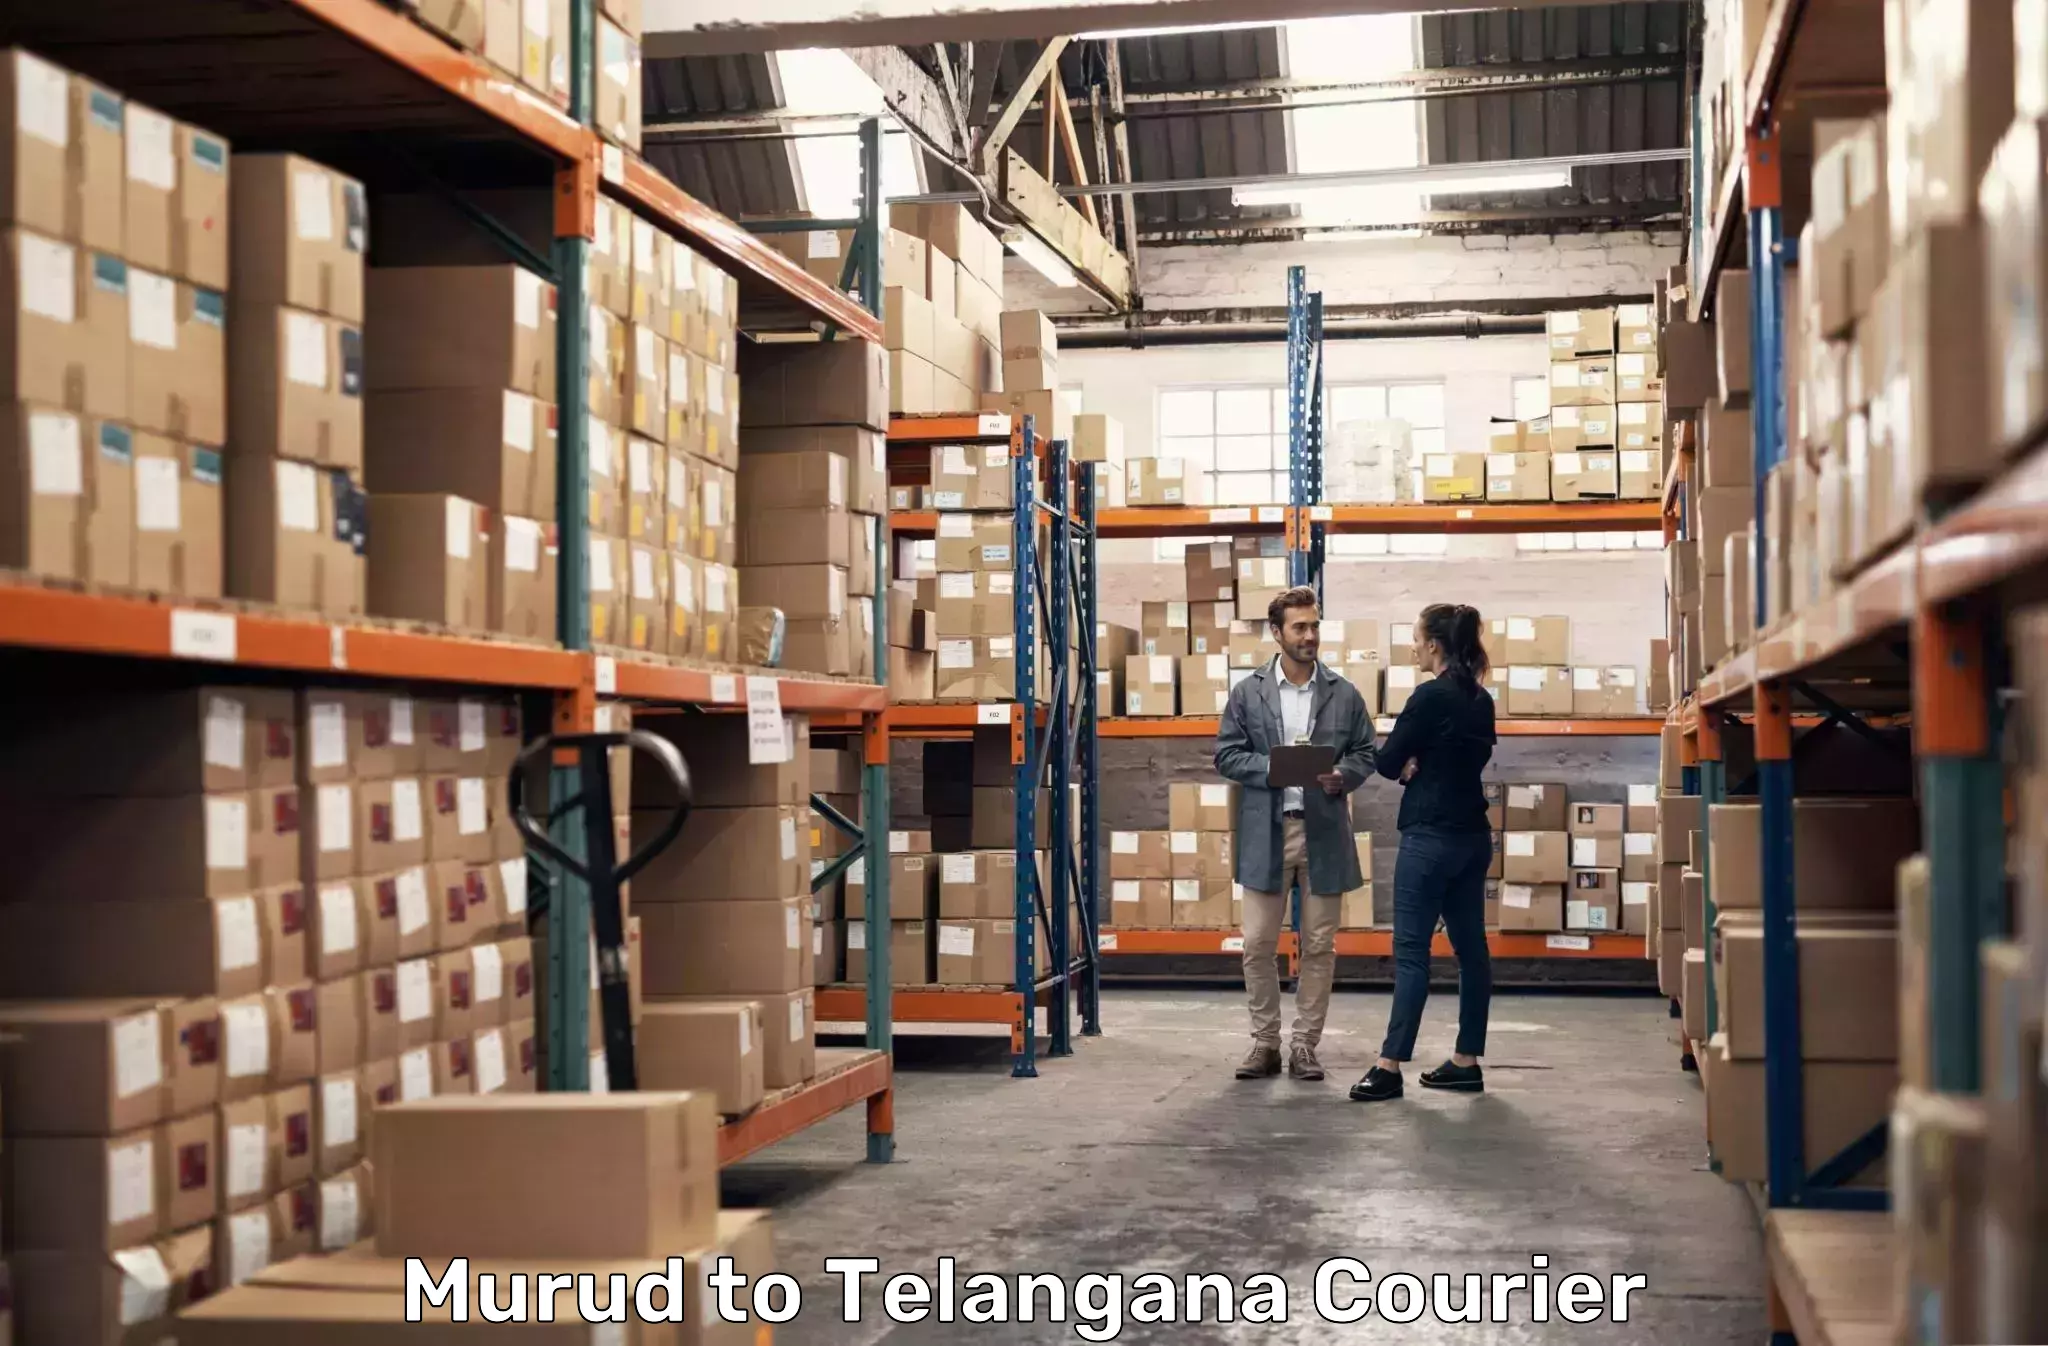 Reliable parcel services in Murud to Narsapur Medak